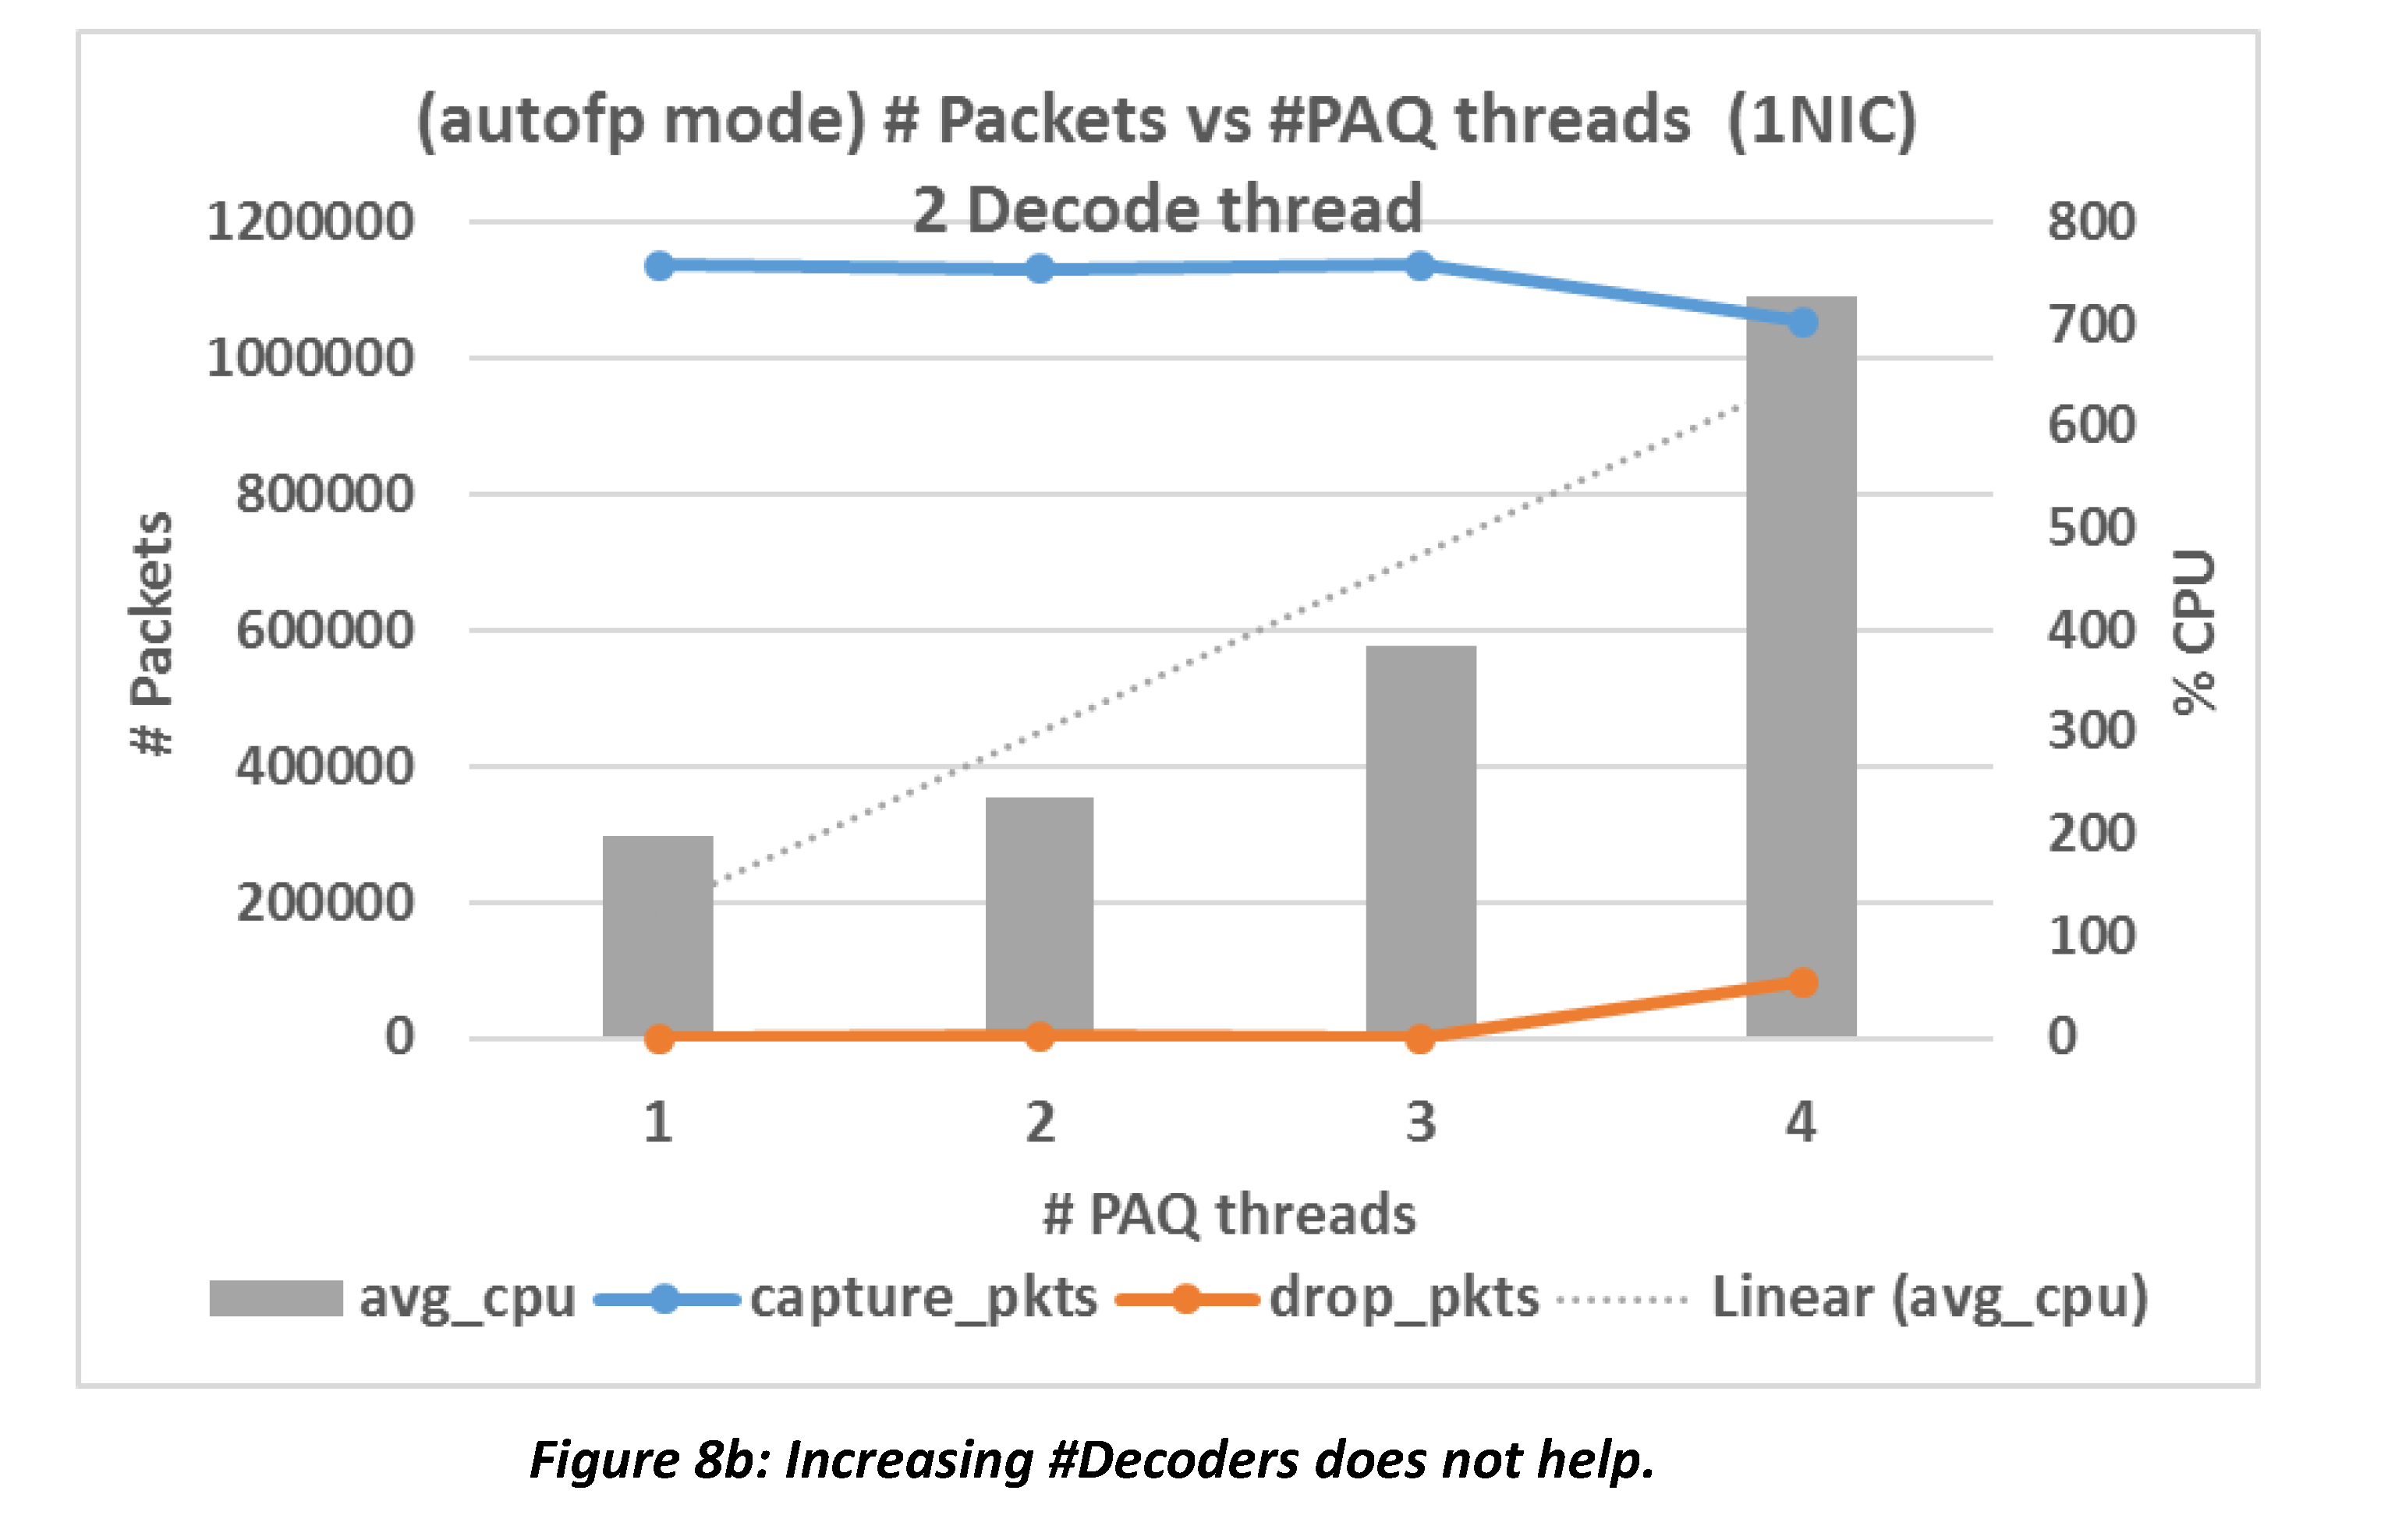 autofp resource usage w.r.t. PAQs, 2 Decoders